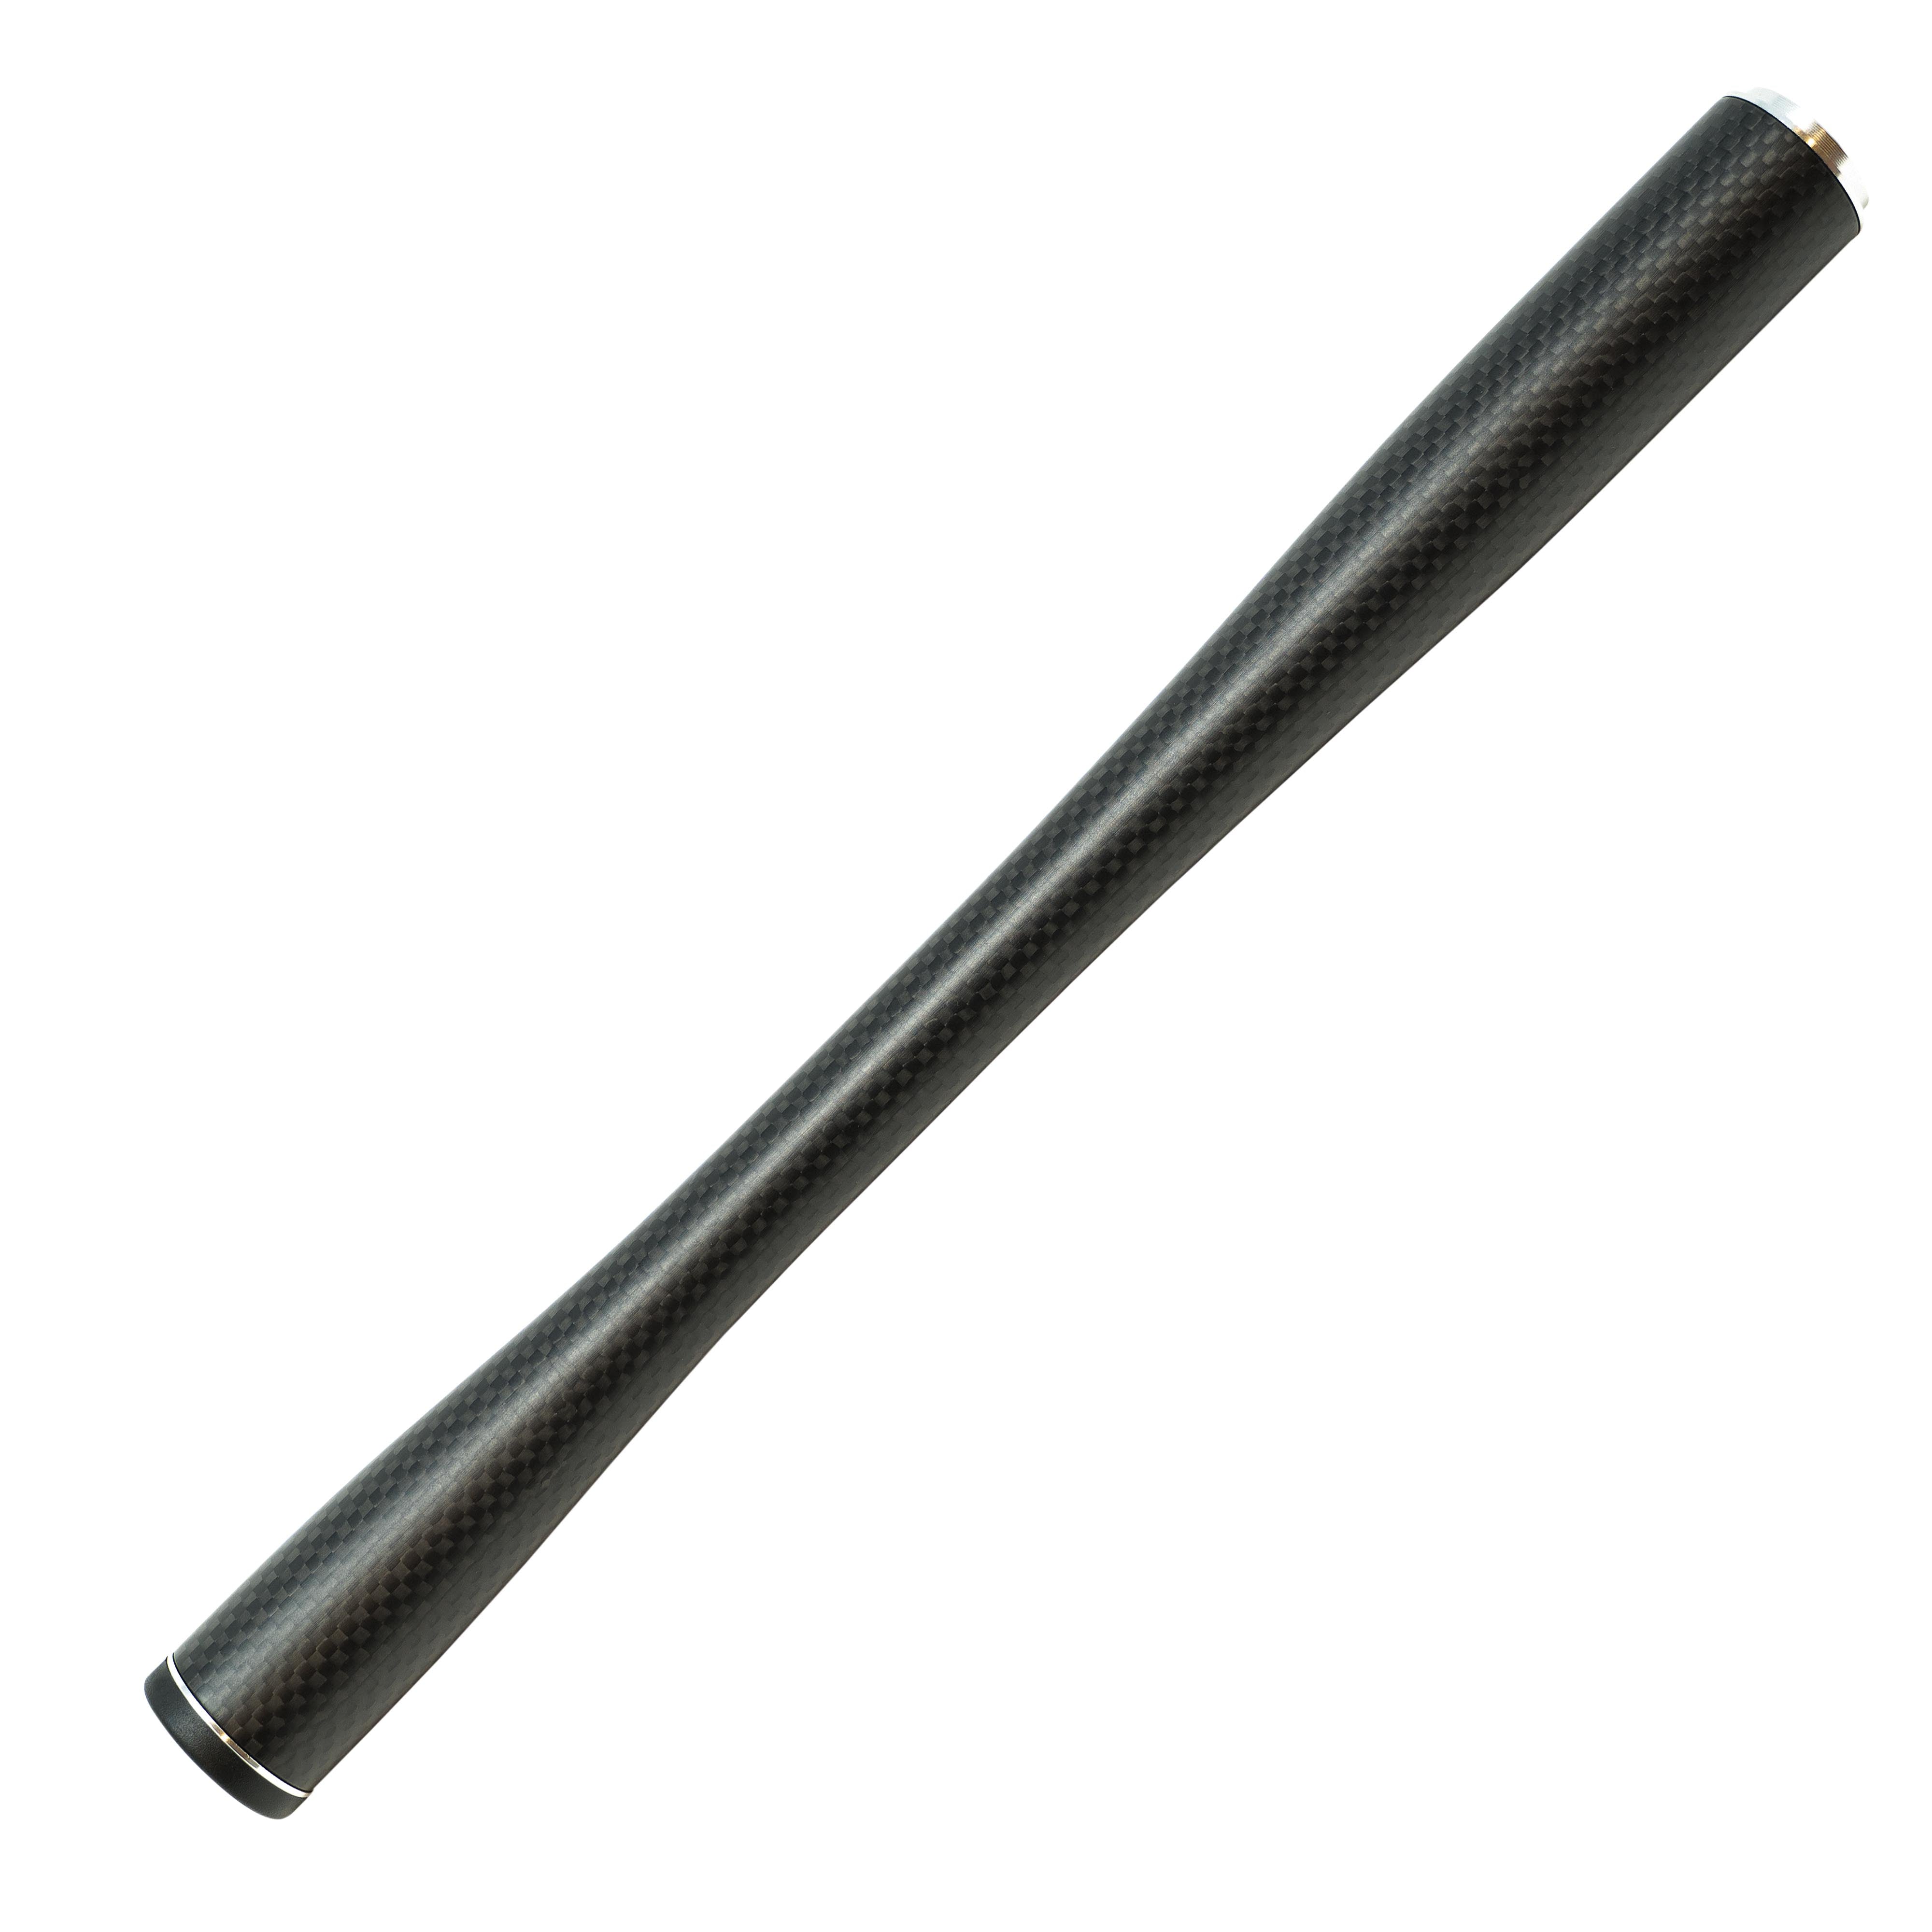 G2 12" Full Length Carbon Handle Grip Kit for Casting Rods